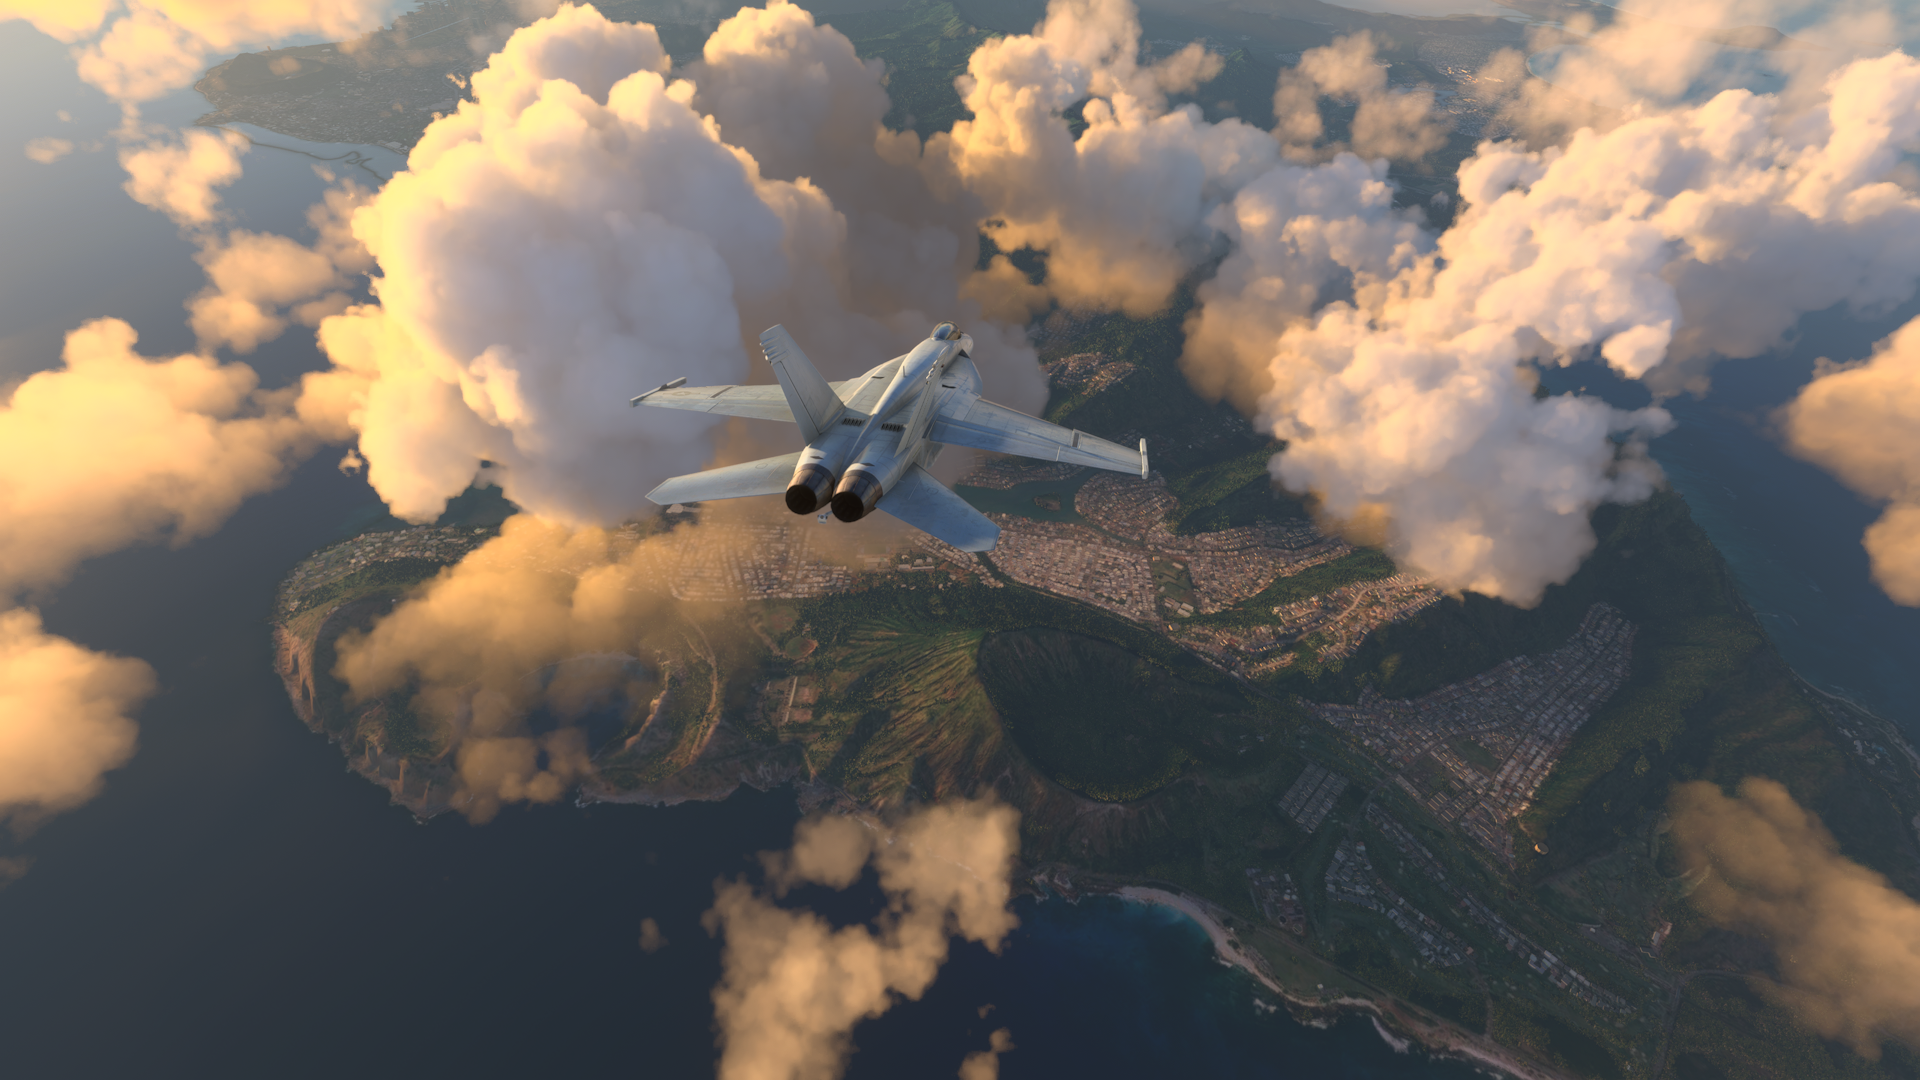 Beginning the descent to land at Honolulu | Microsoft Flight Simulator